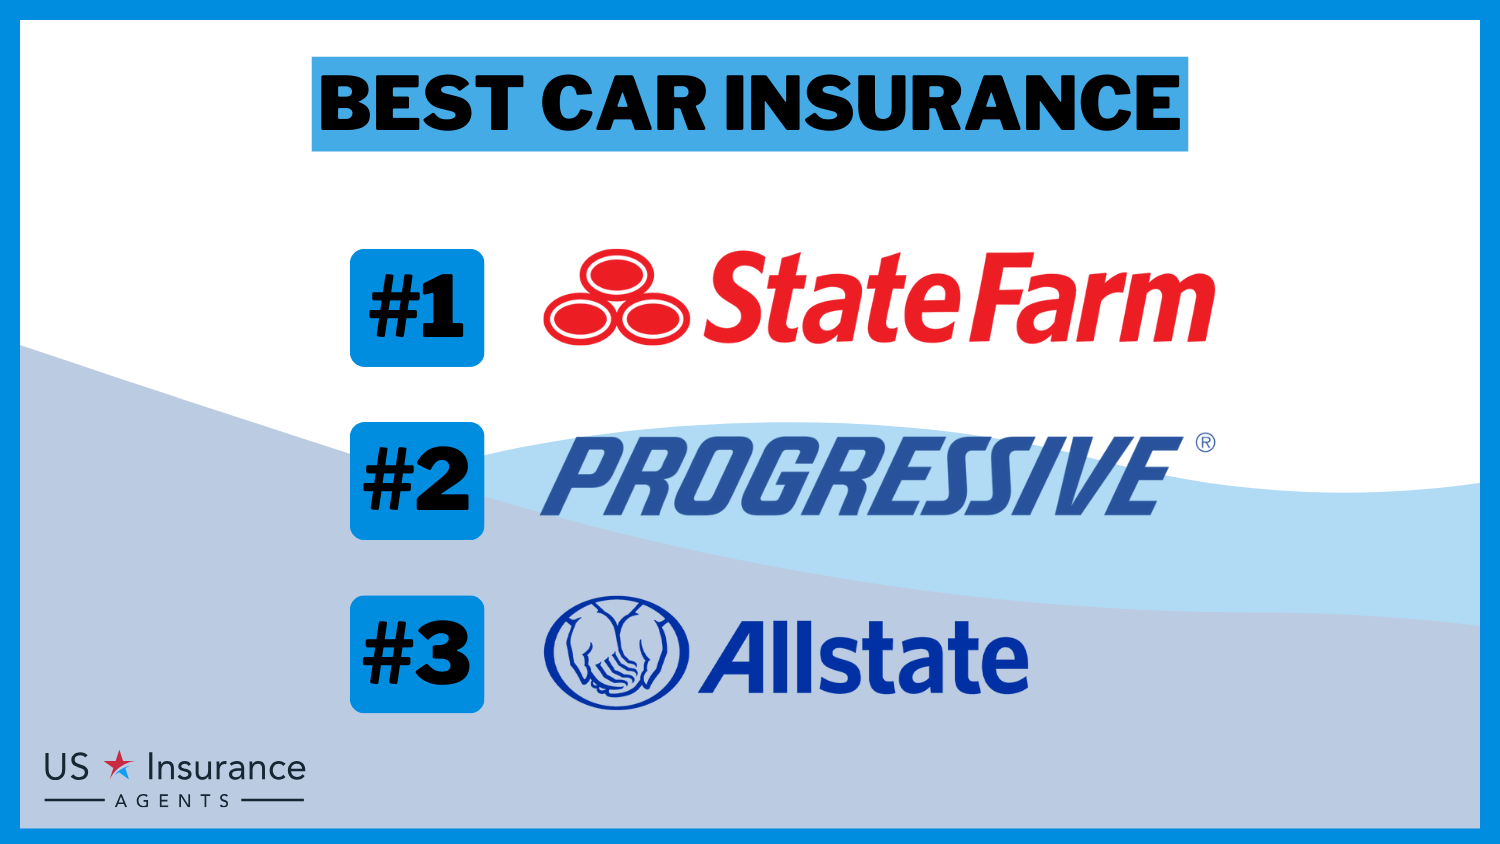 State Farm, Progressive, and Allstate: Best Car Insurance